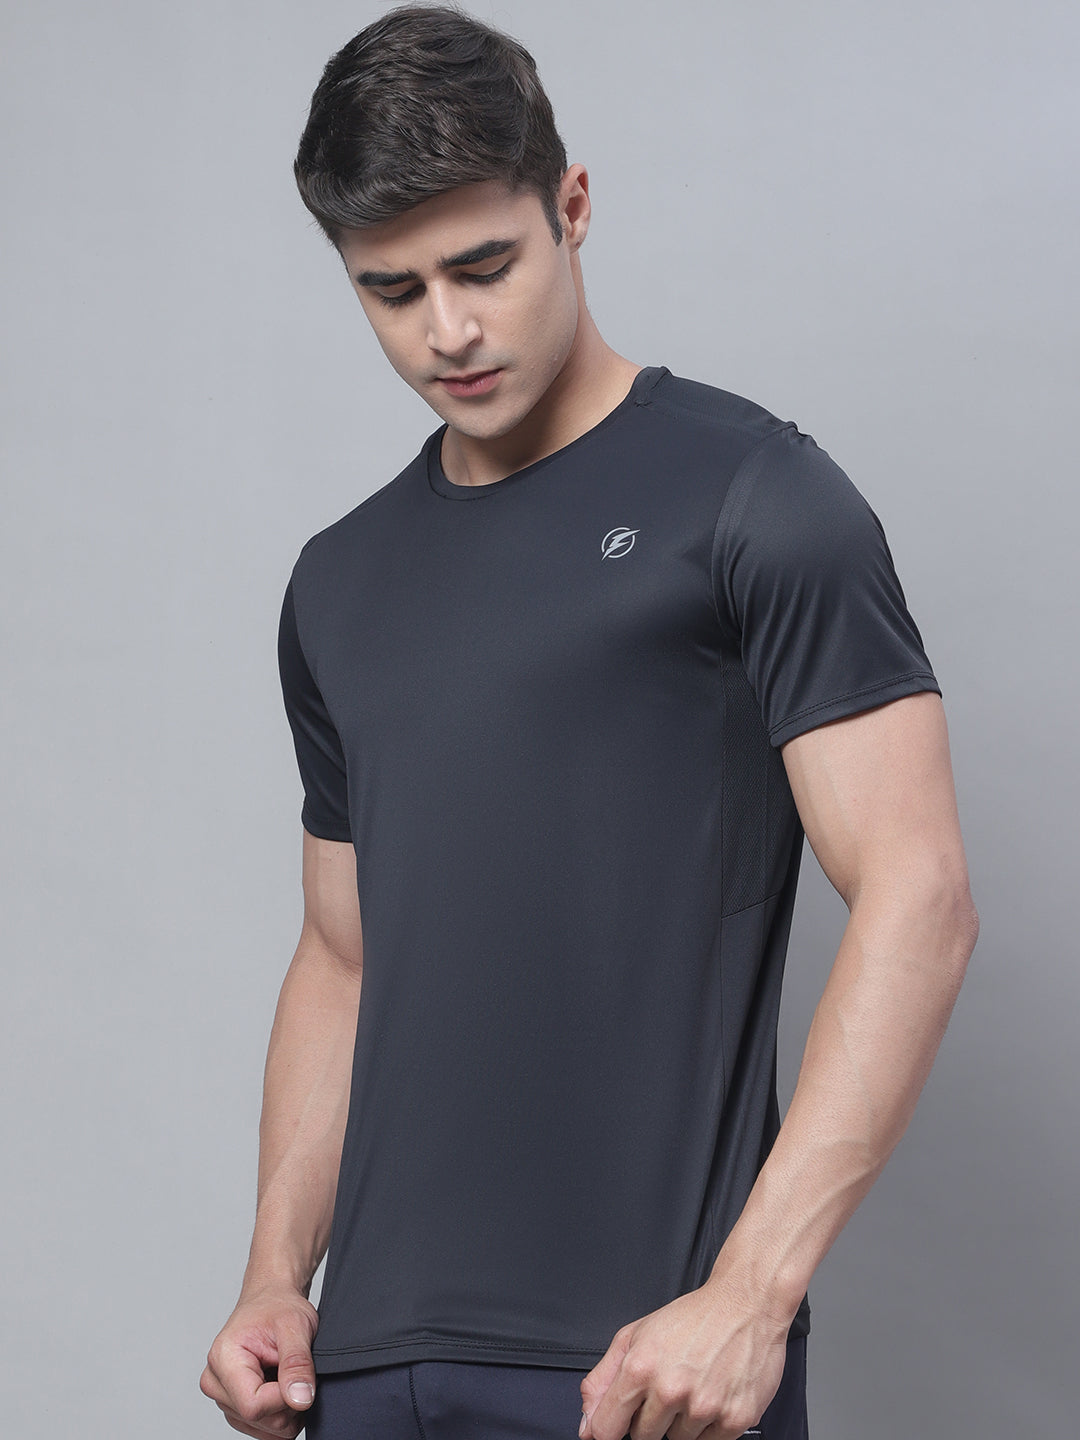 Men Half Sleeves Black Round Neck Sports T-shirt - Friskers